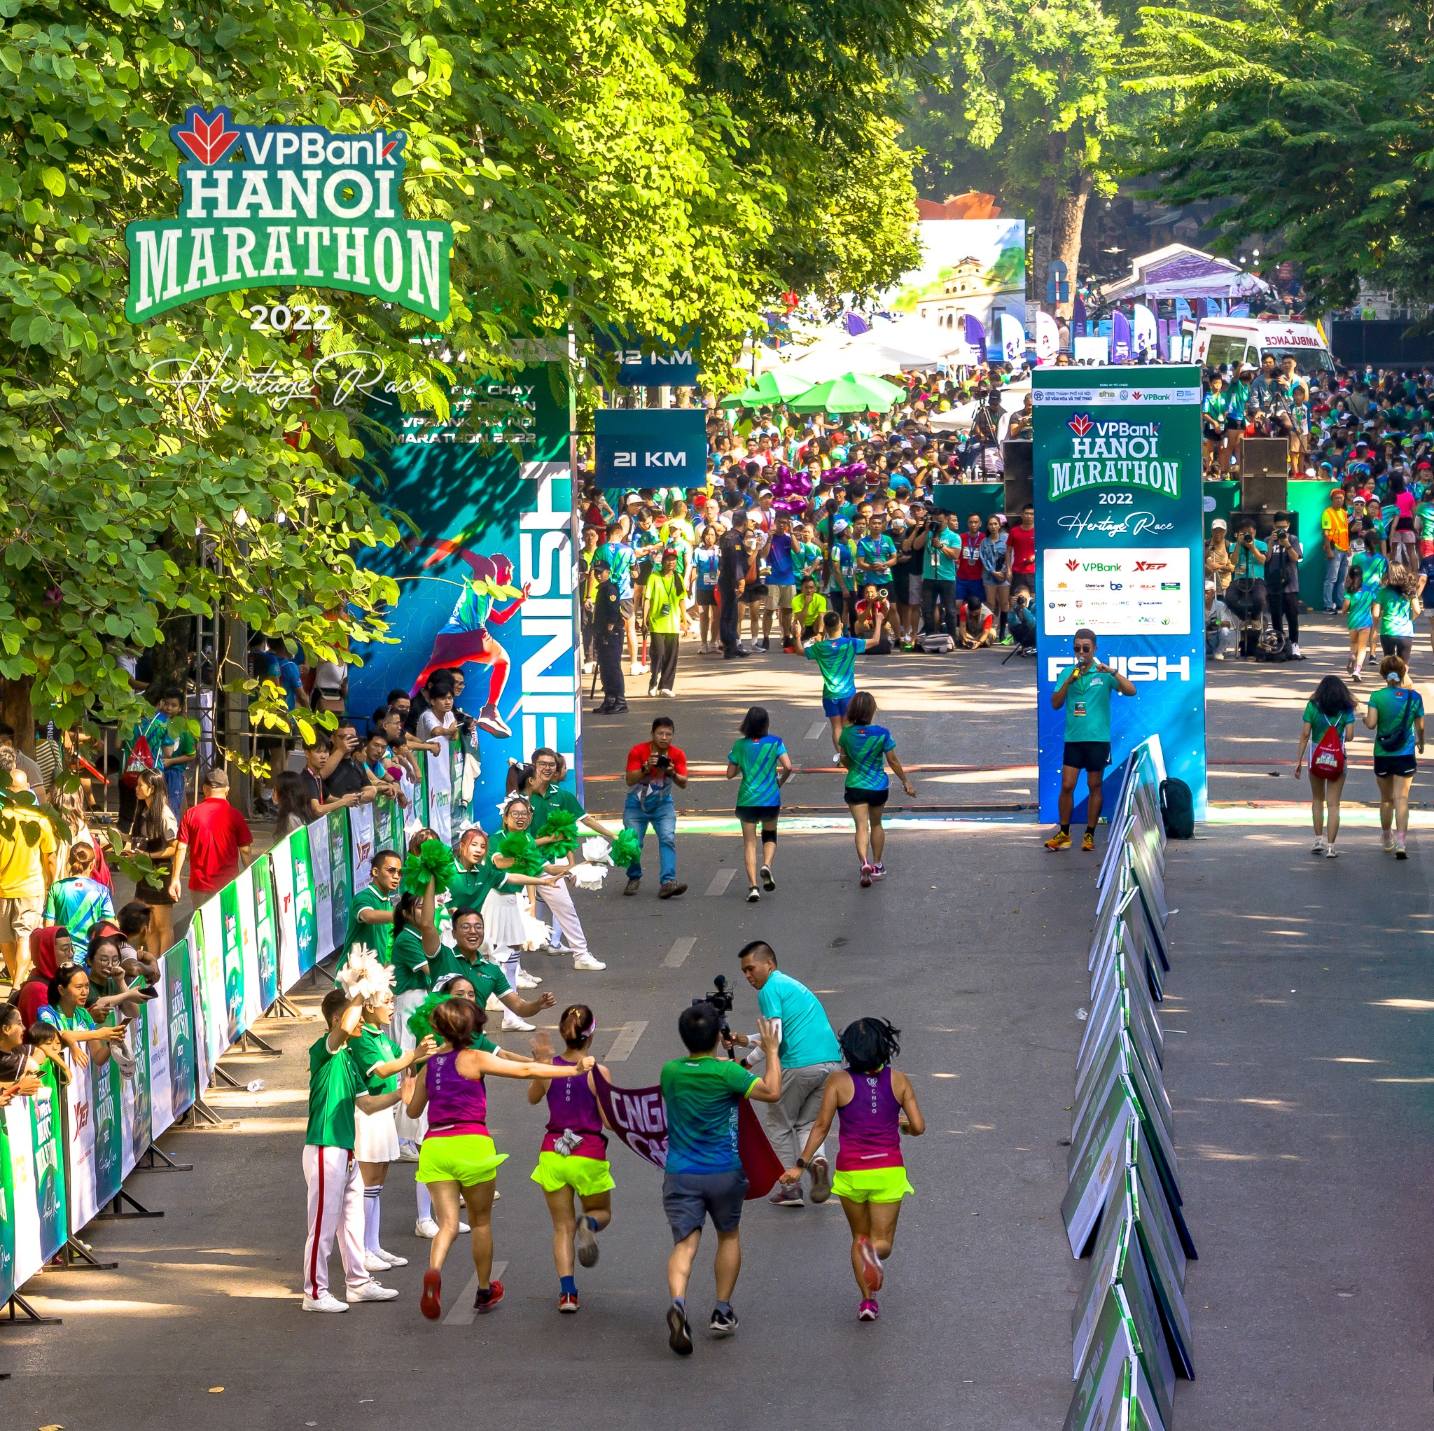 VPBank Hanoi Marathon 2022 - A Spectacular Race